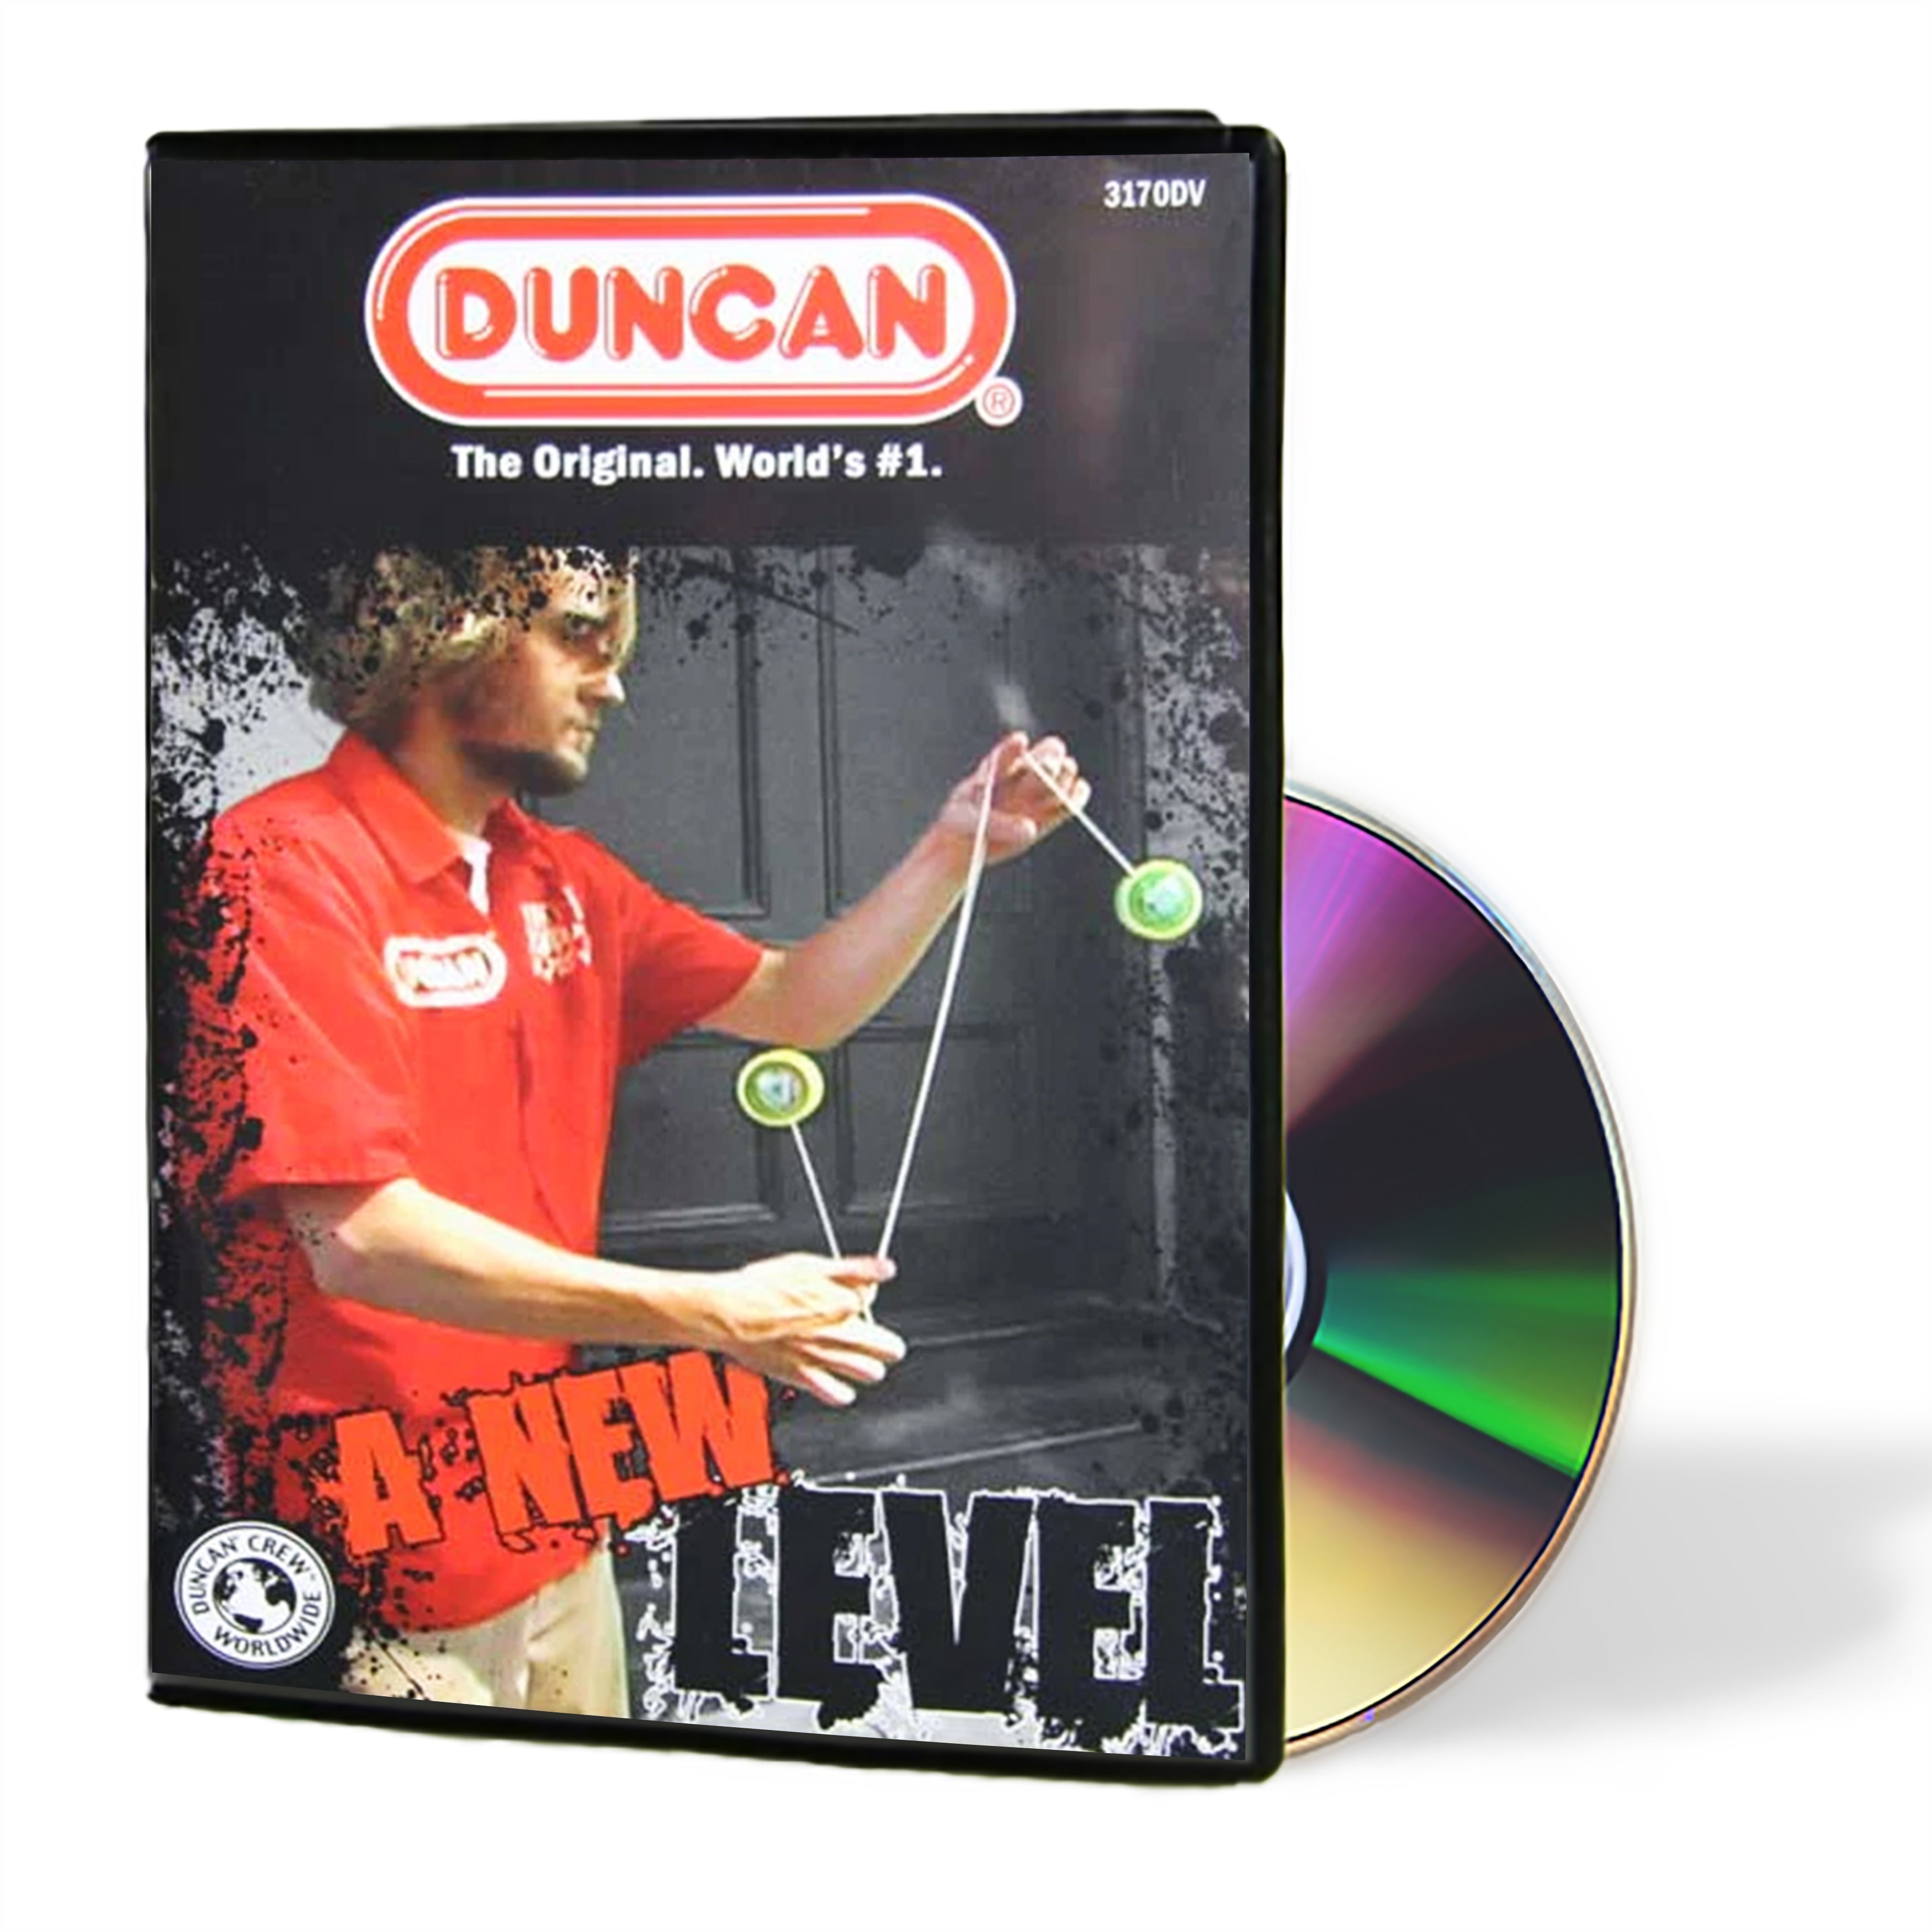 Duncan' A New Level' DVD